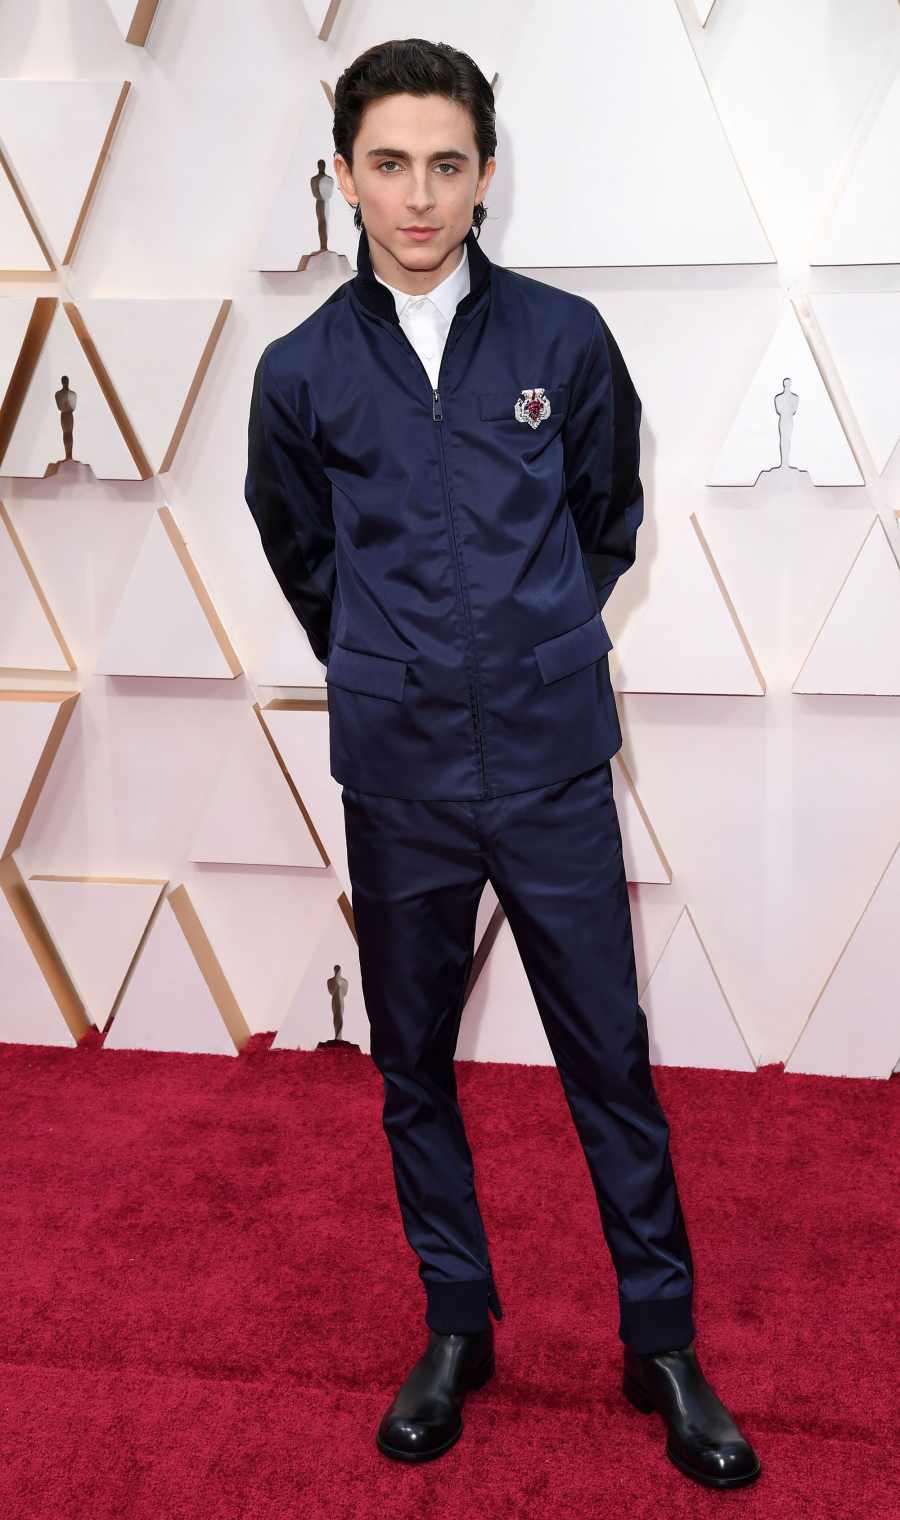 Oscars 2020 Best Dressed Men - Timothee Chalamet